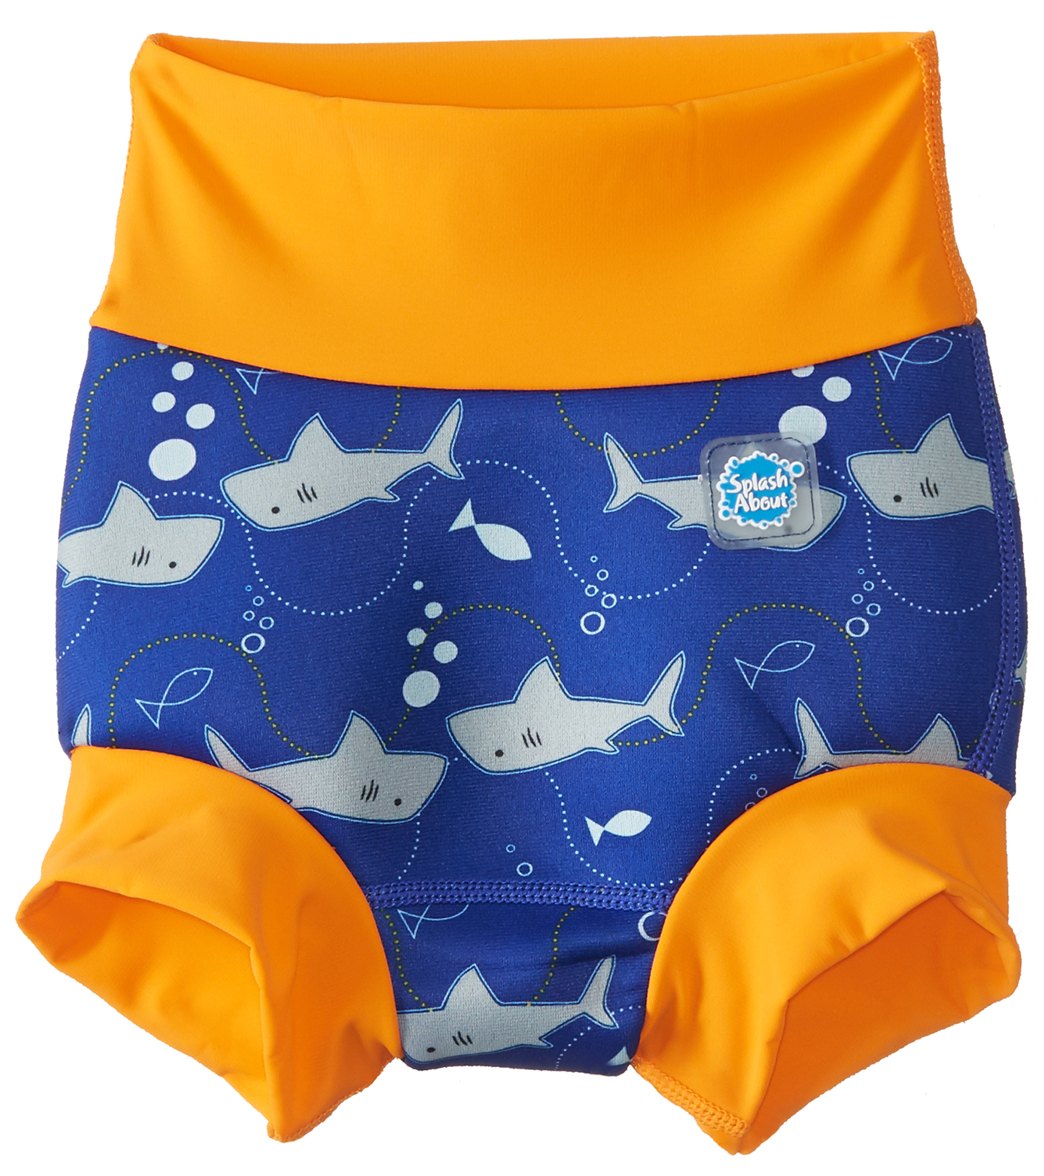 Splash About New Improved Happy Nappy Swim Diaper 3 Months-3T - Shark Orange Large 6-12 Months - Swimoutlet.com